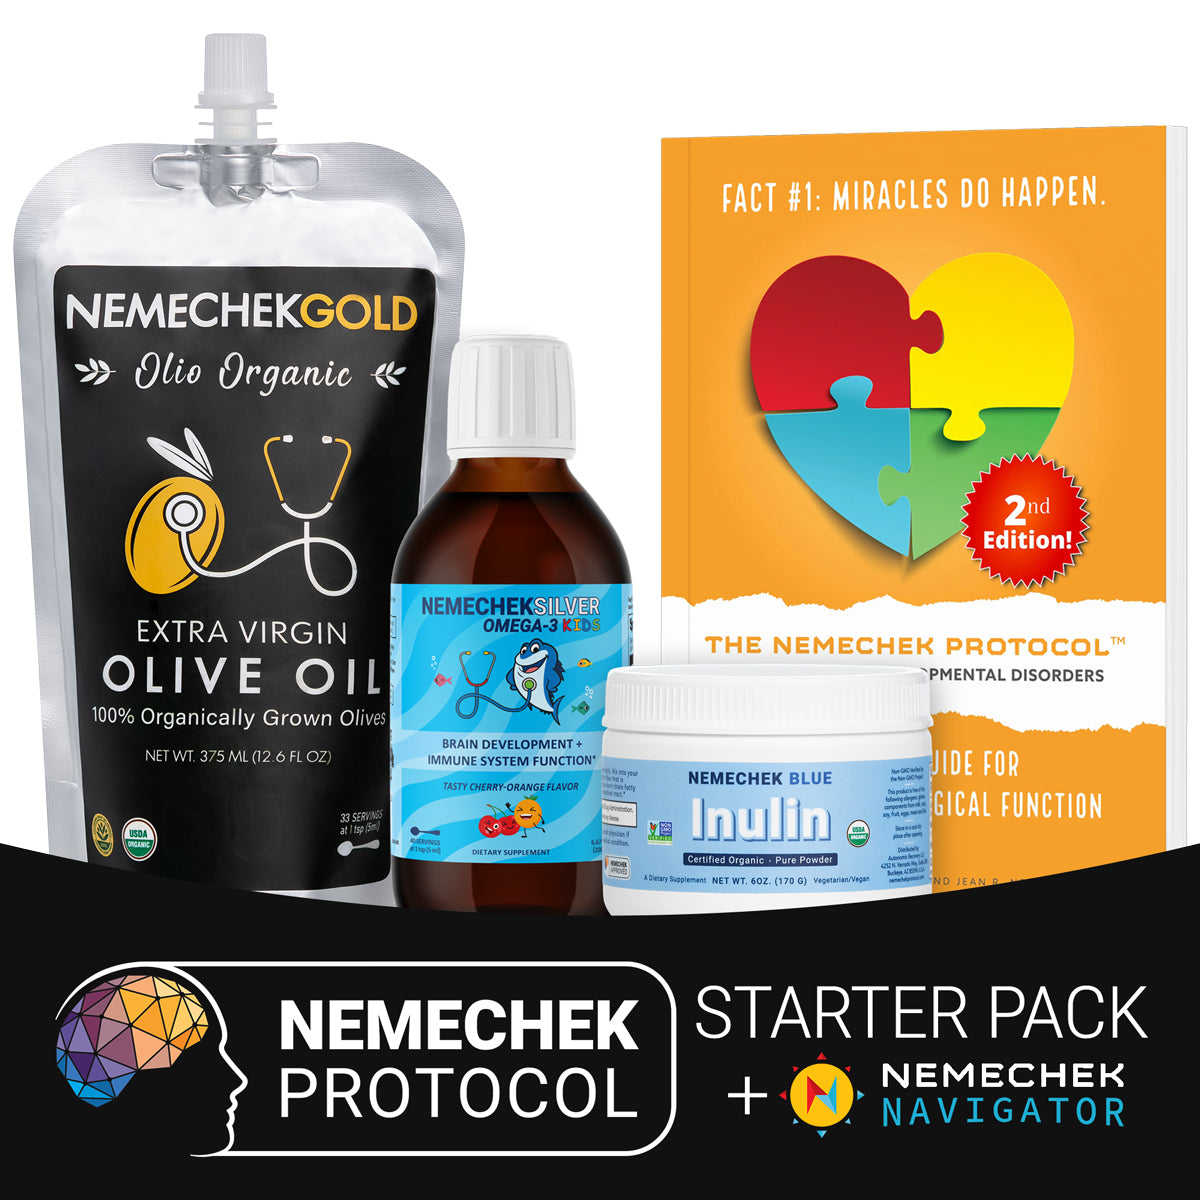 Protocol Recovery Starter Pack + Free Nemechek Navigator Access!